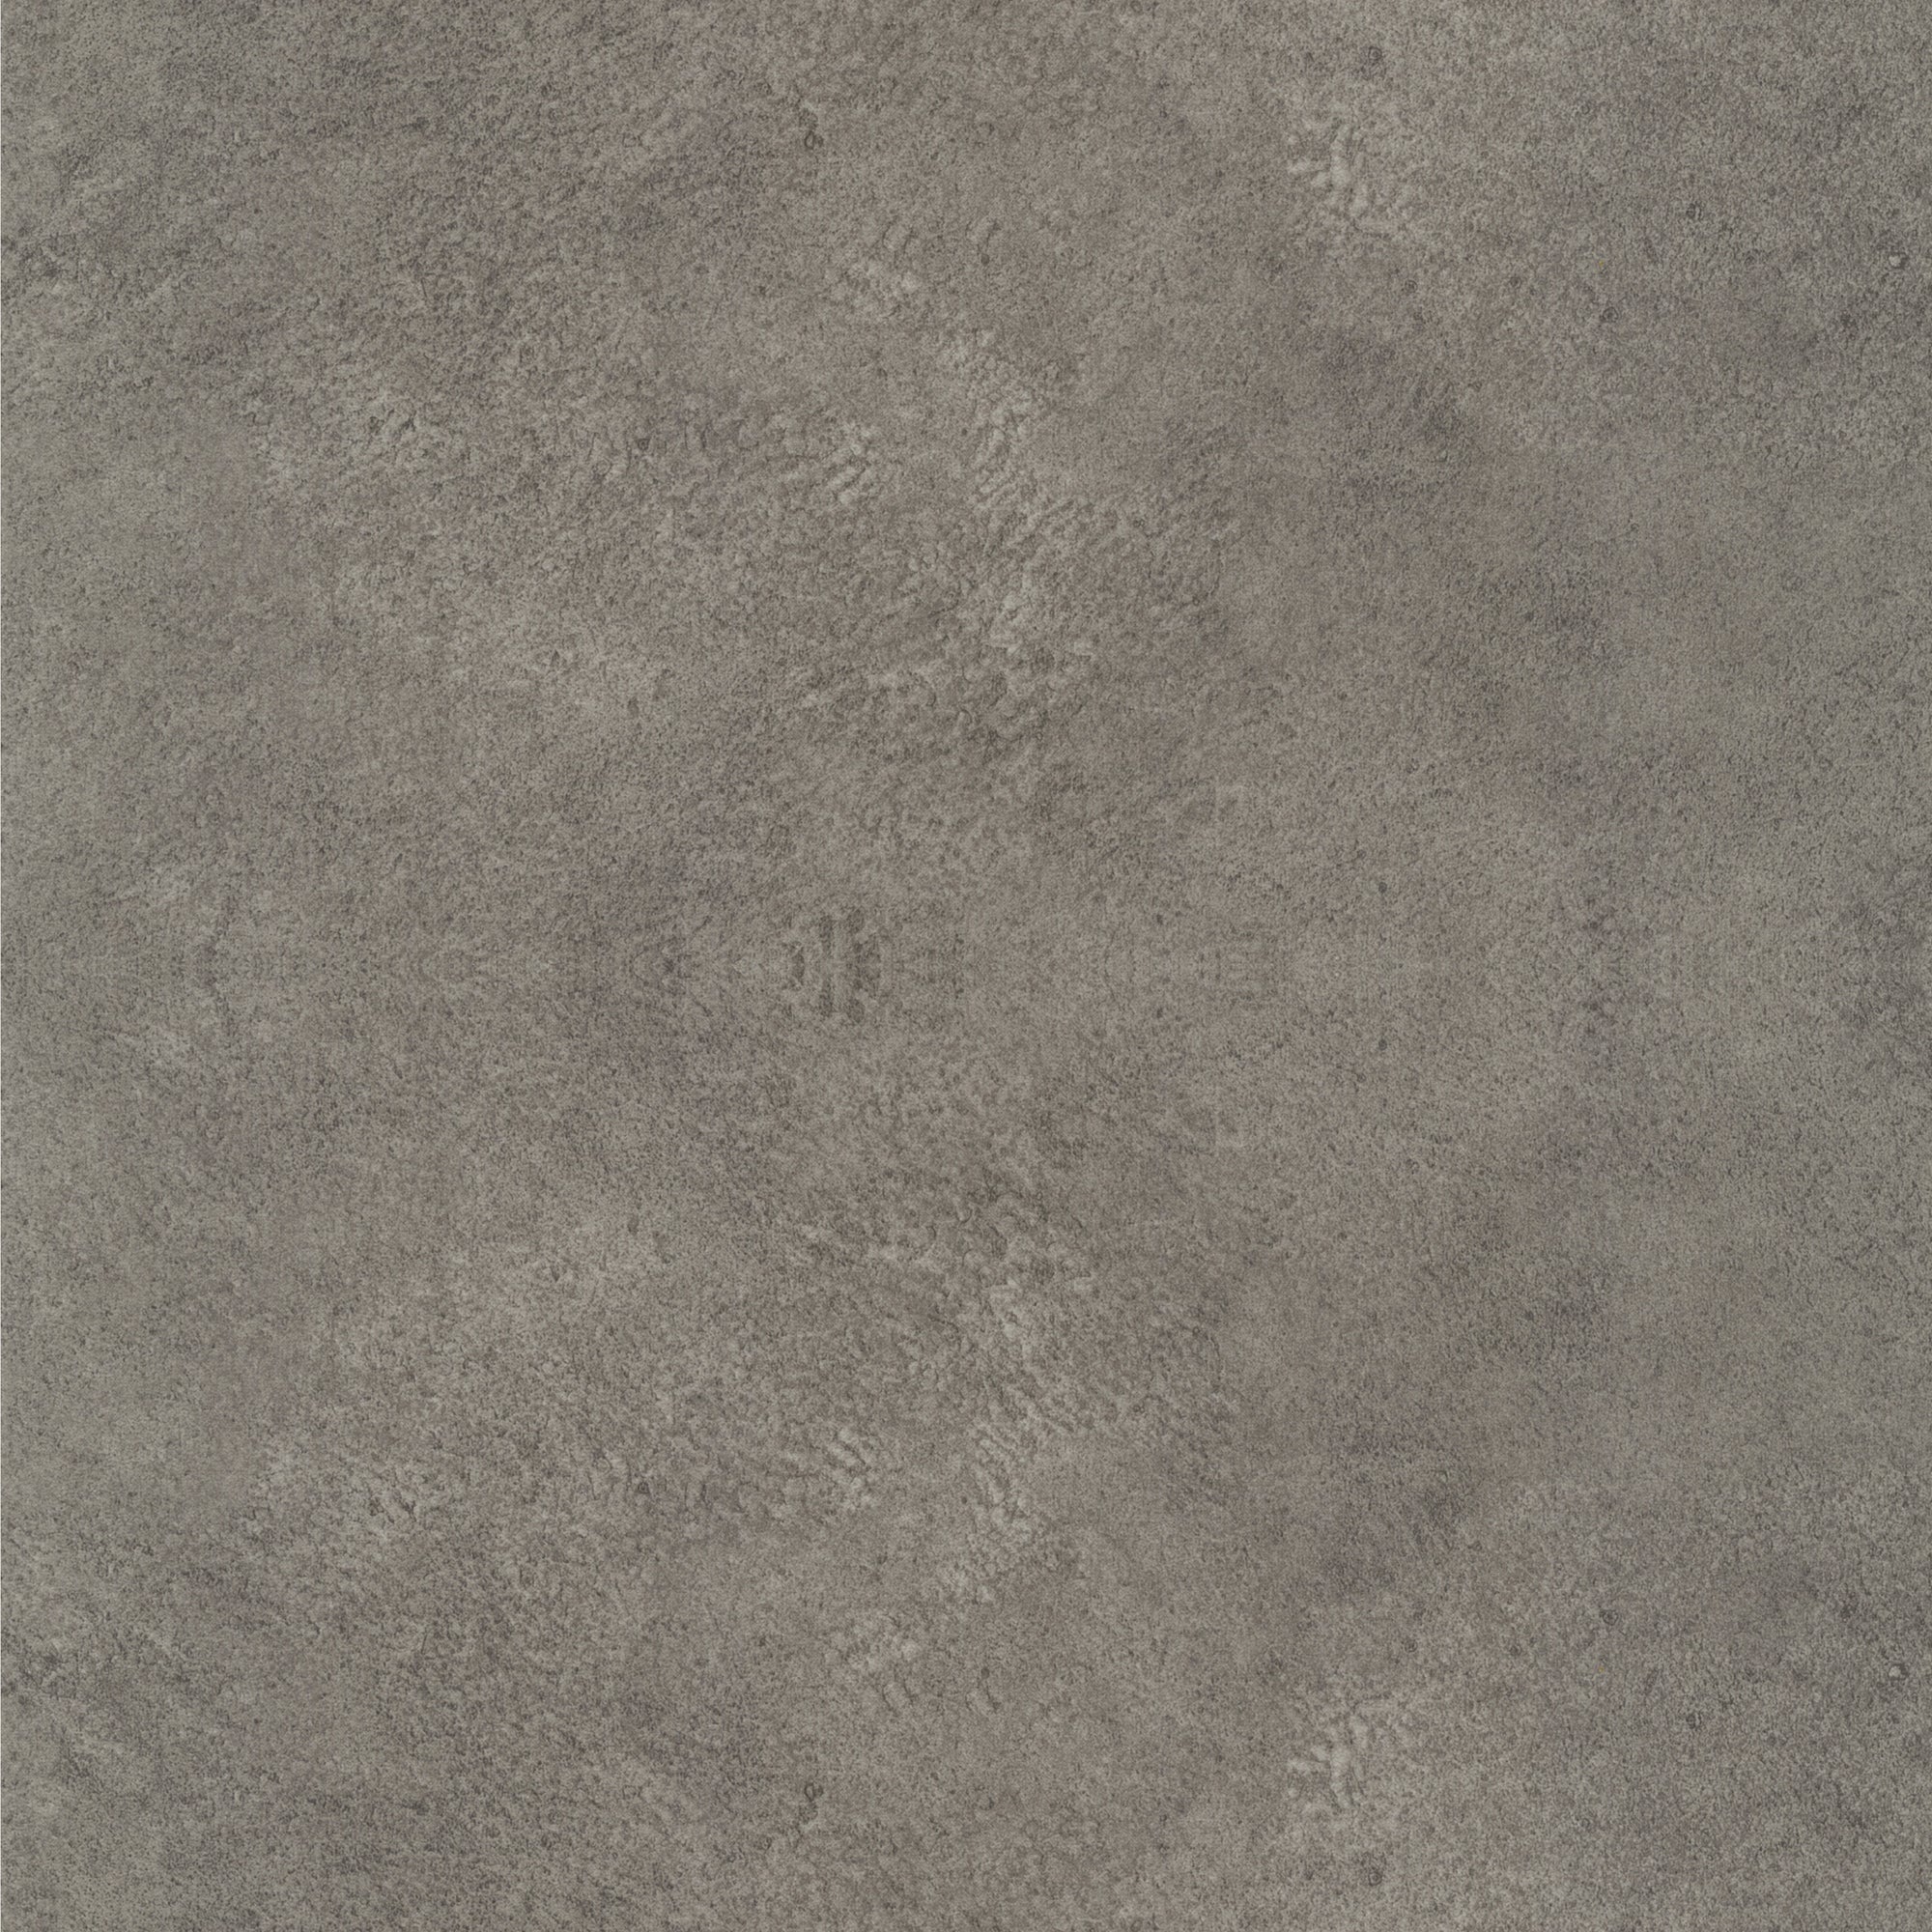 Light Grey Concrete